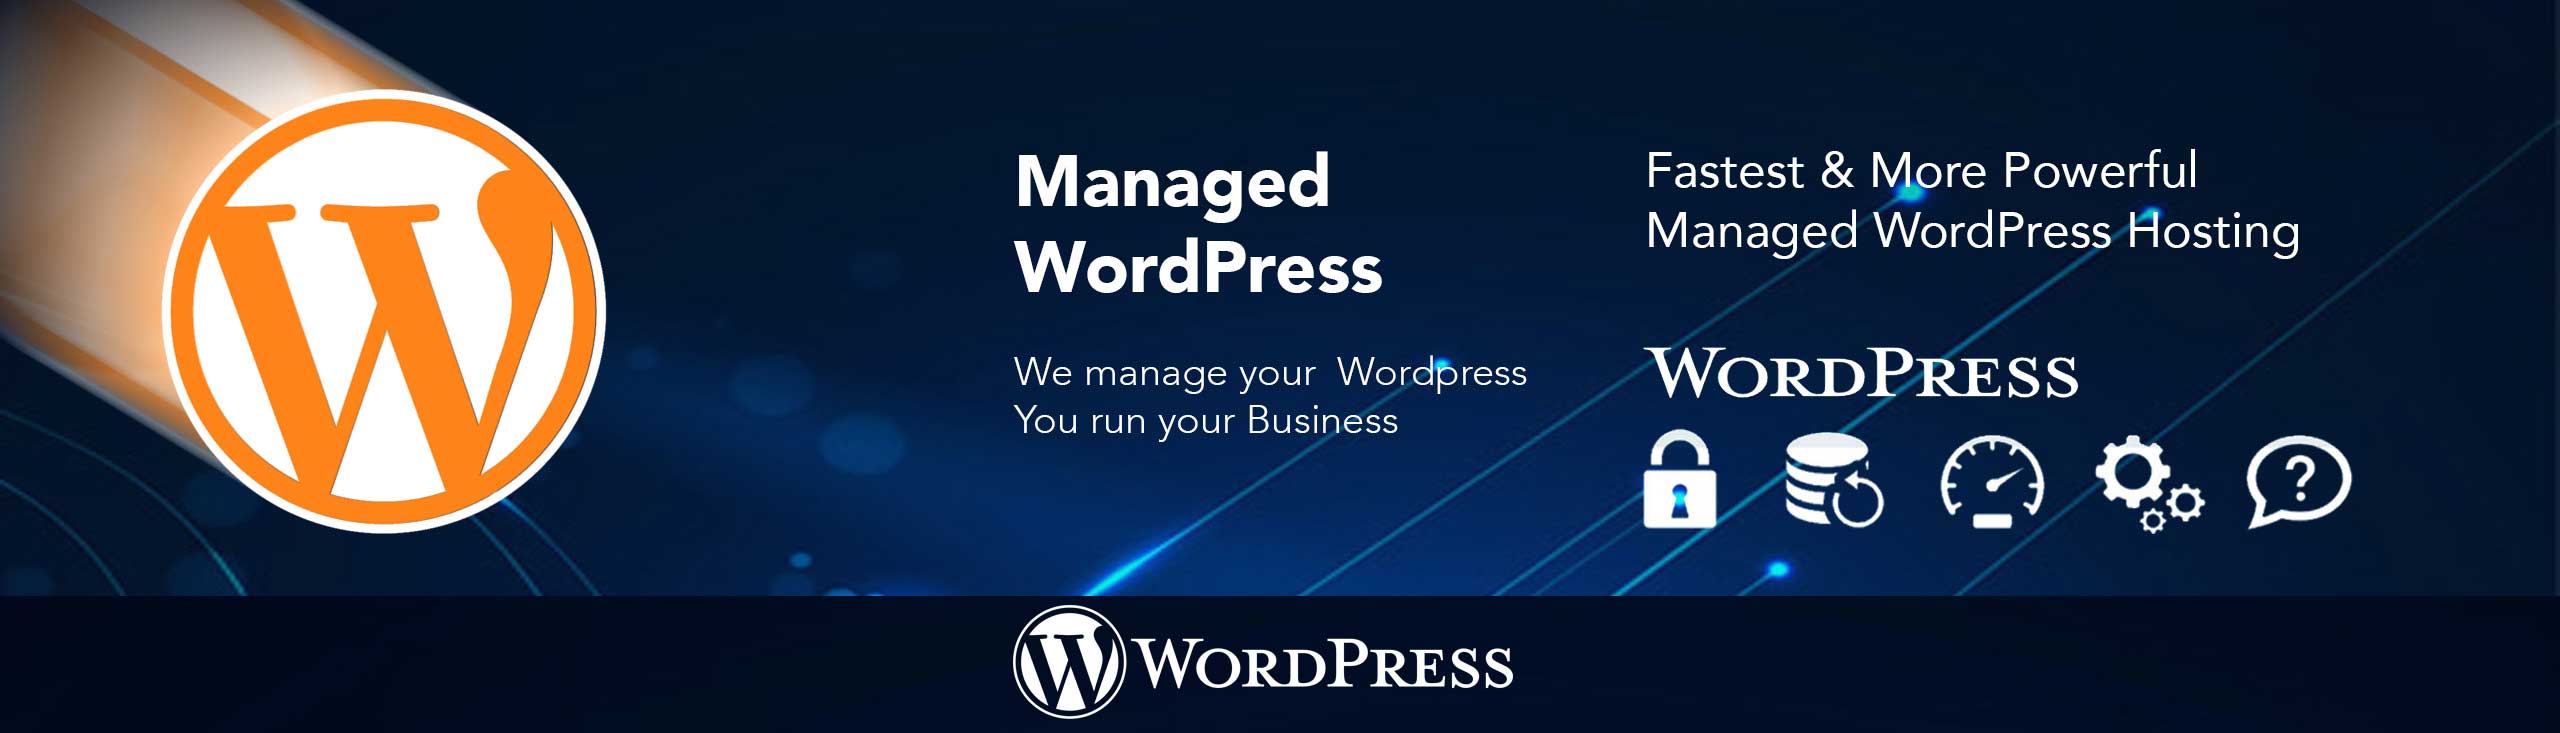 Managed WordPress